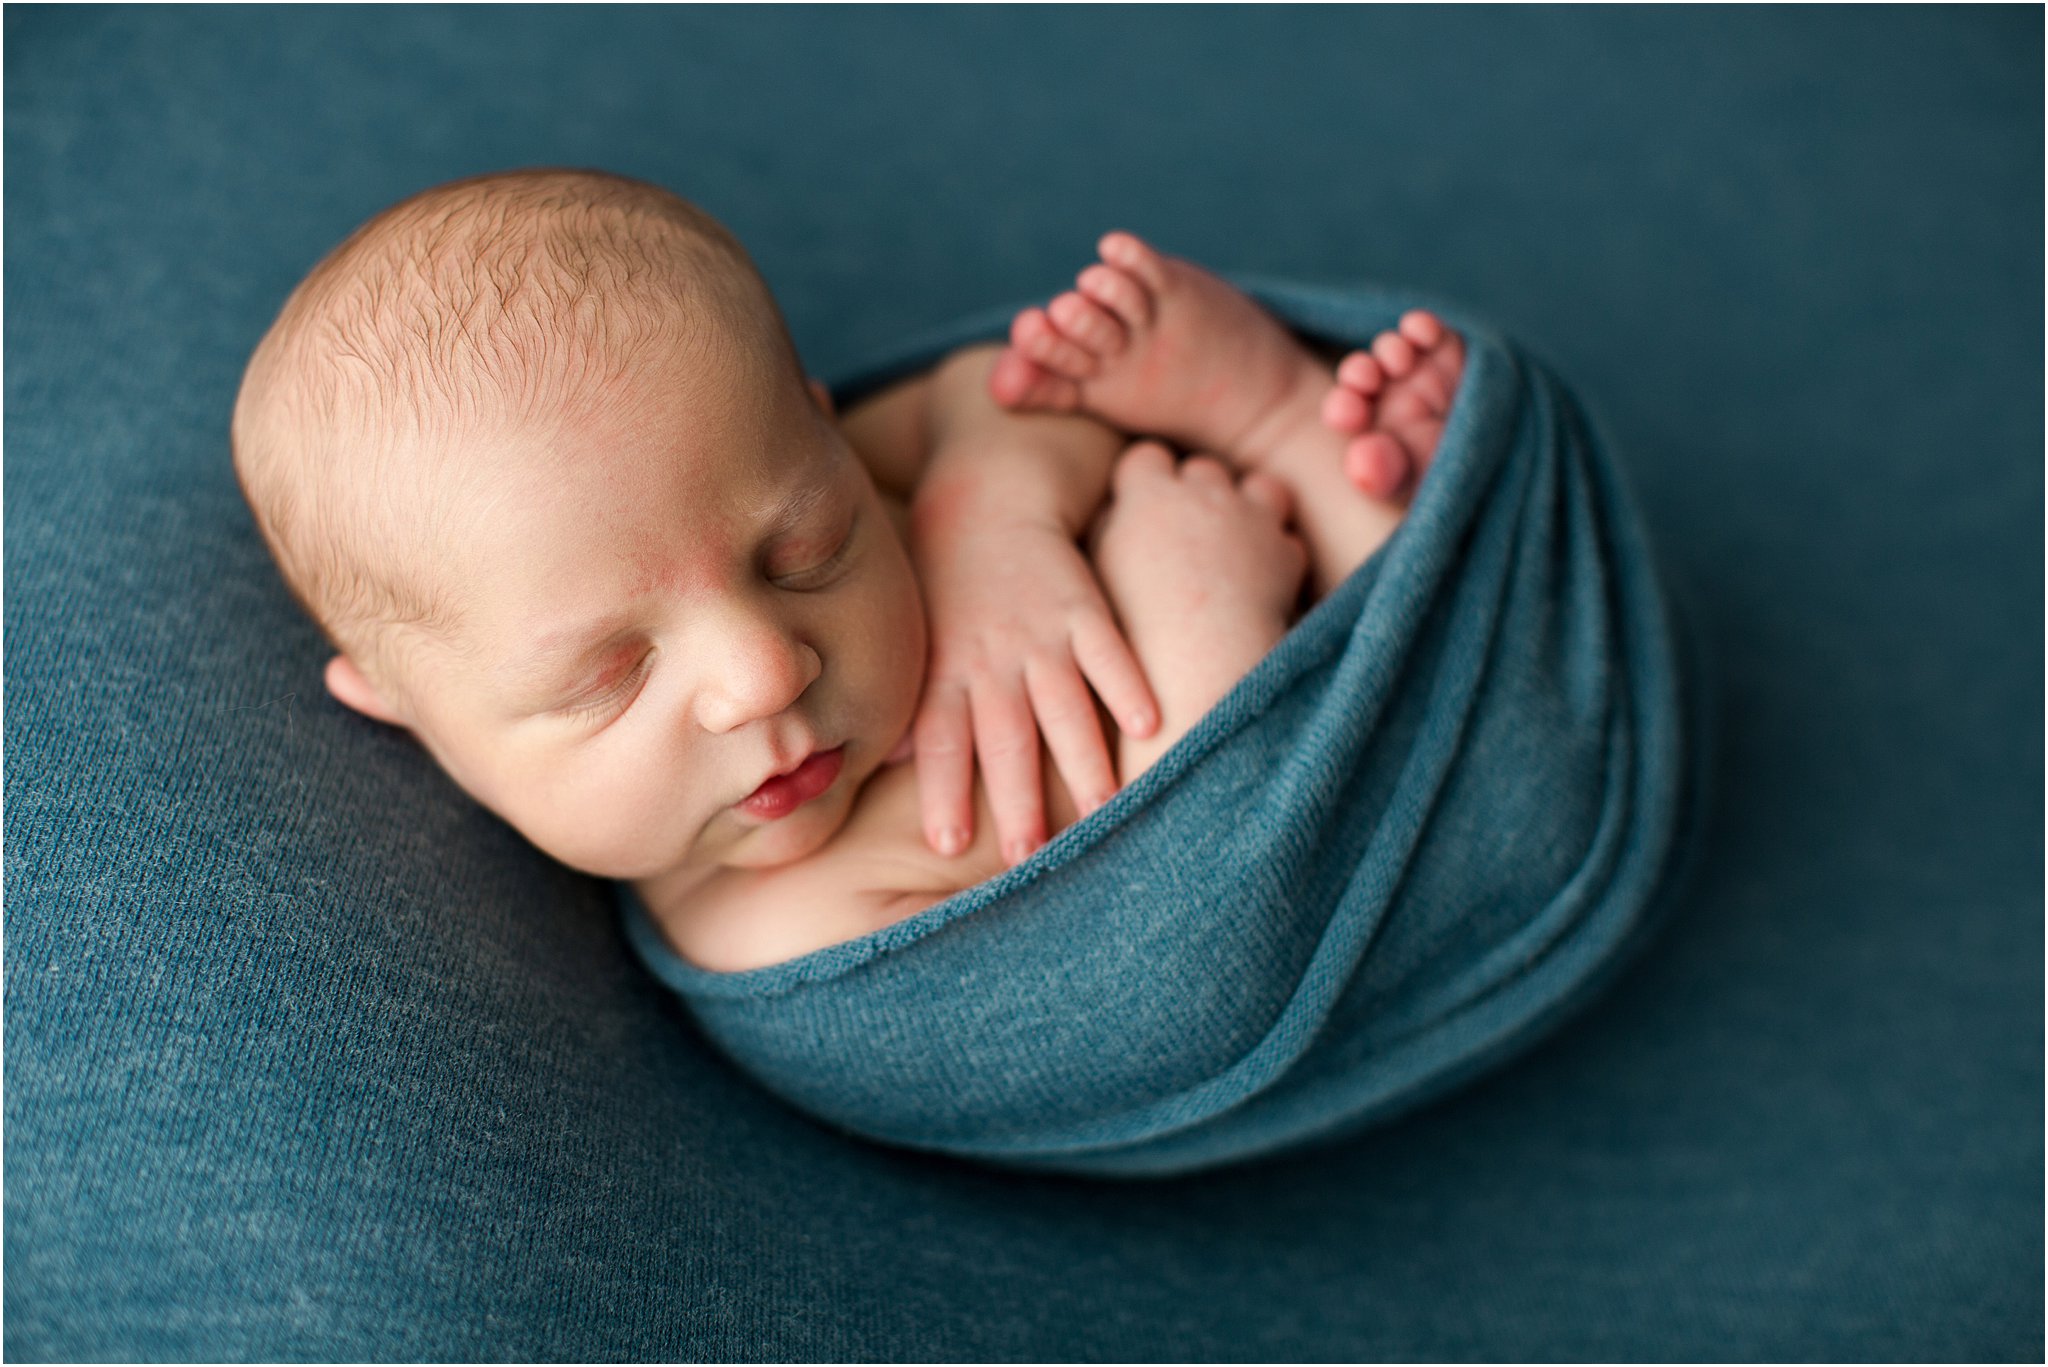 curled up newborn boy posed on blue fabric